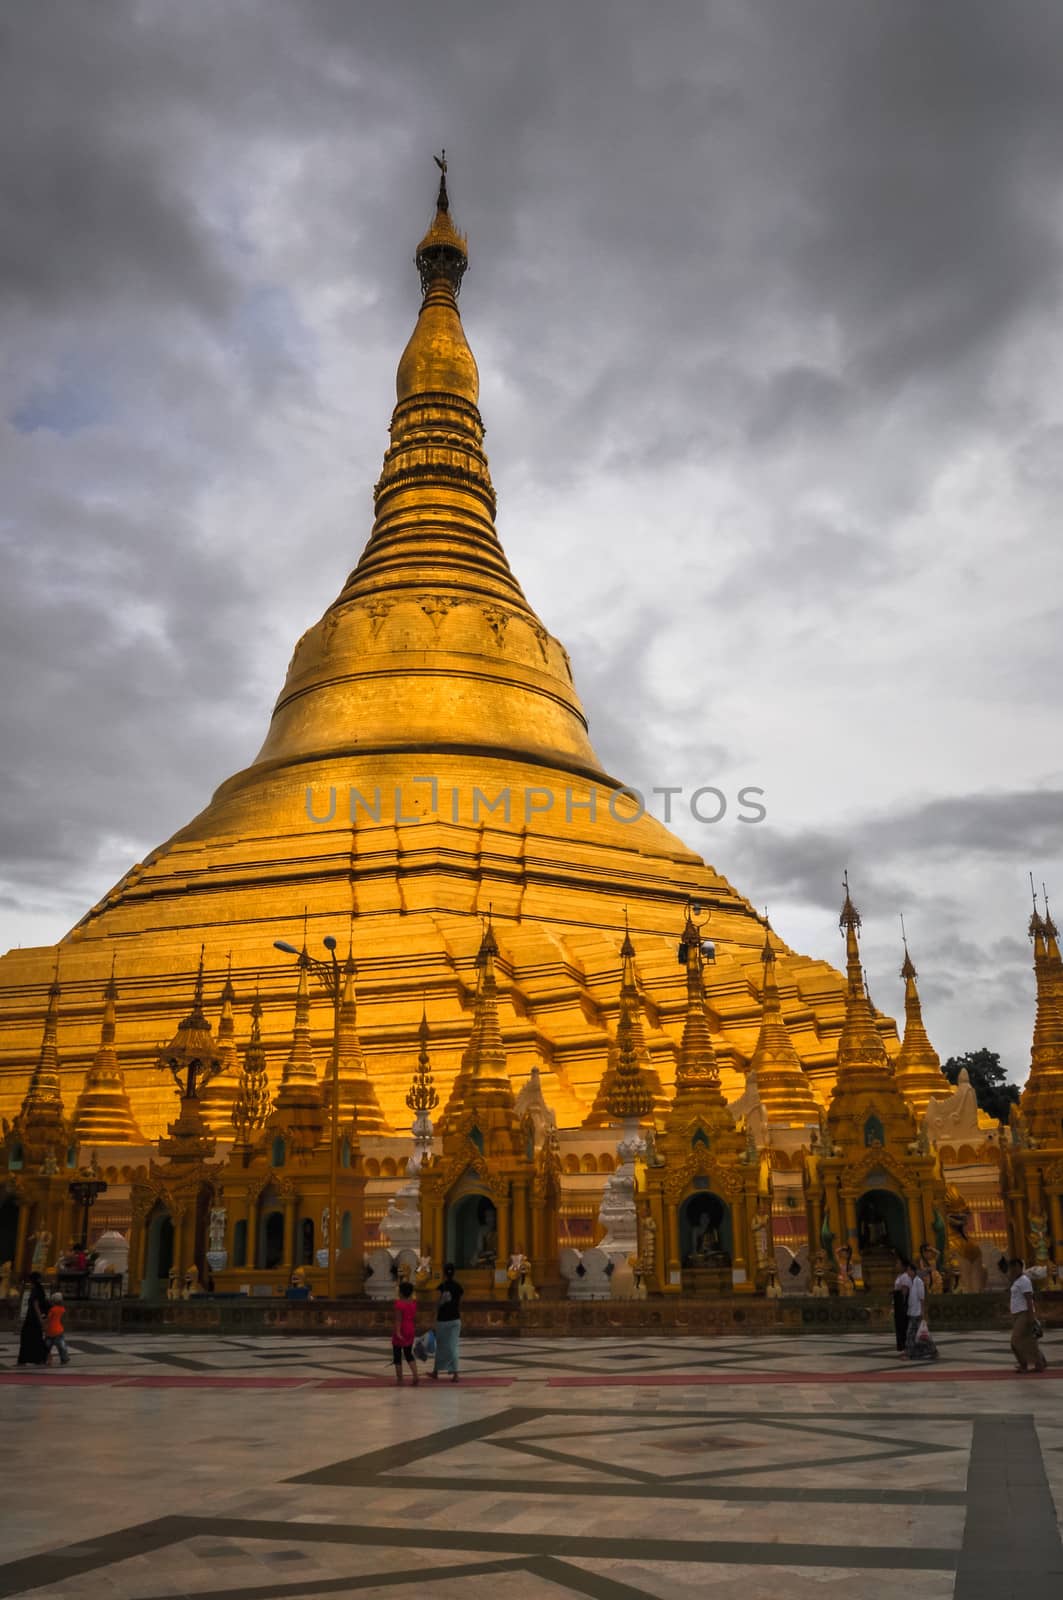 Shwedagon Pagoda Temple shining in the beautiful sunset in Yango by weltreisendertj